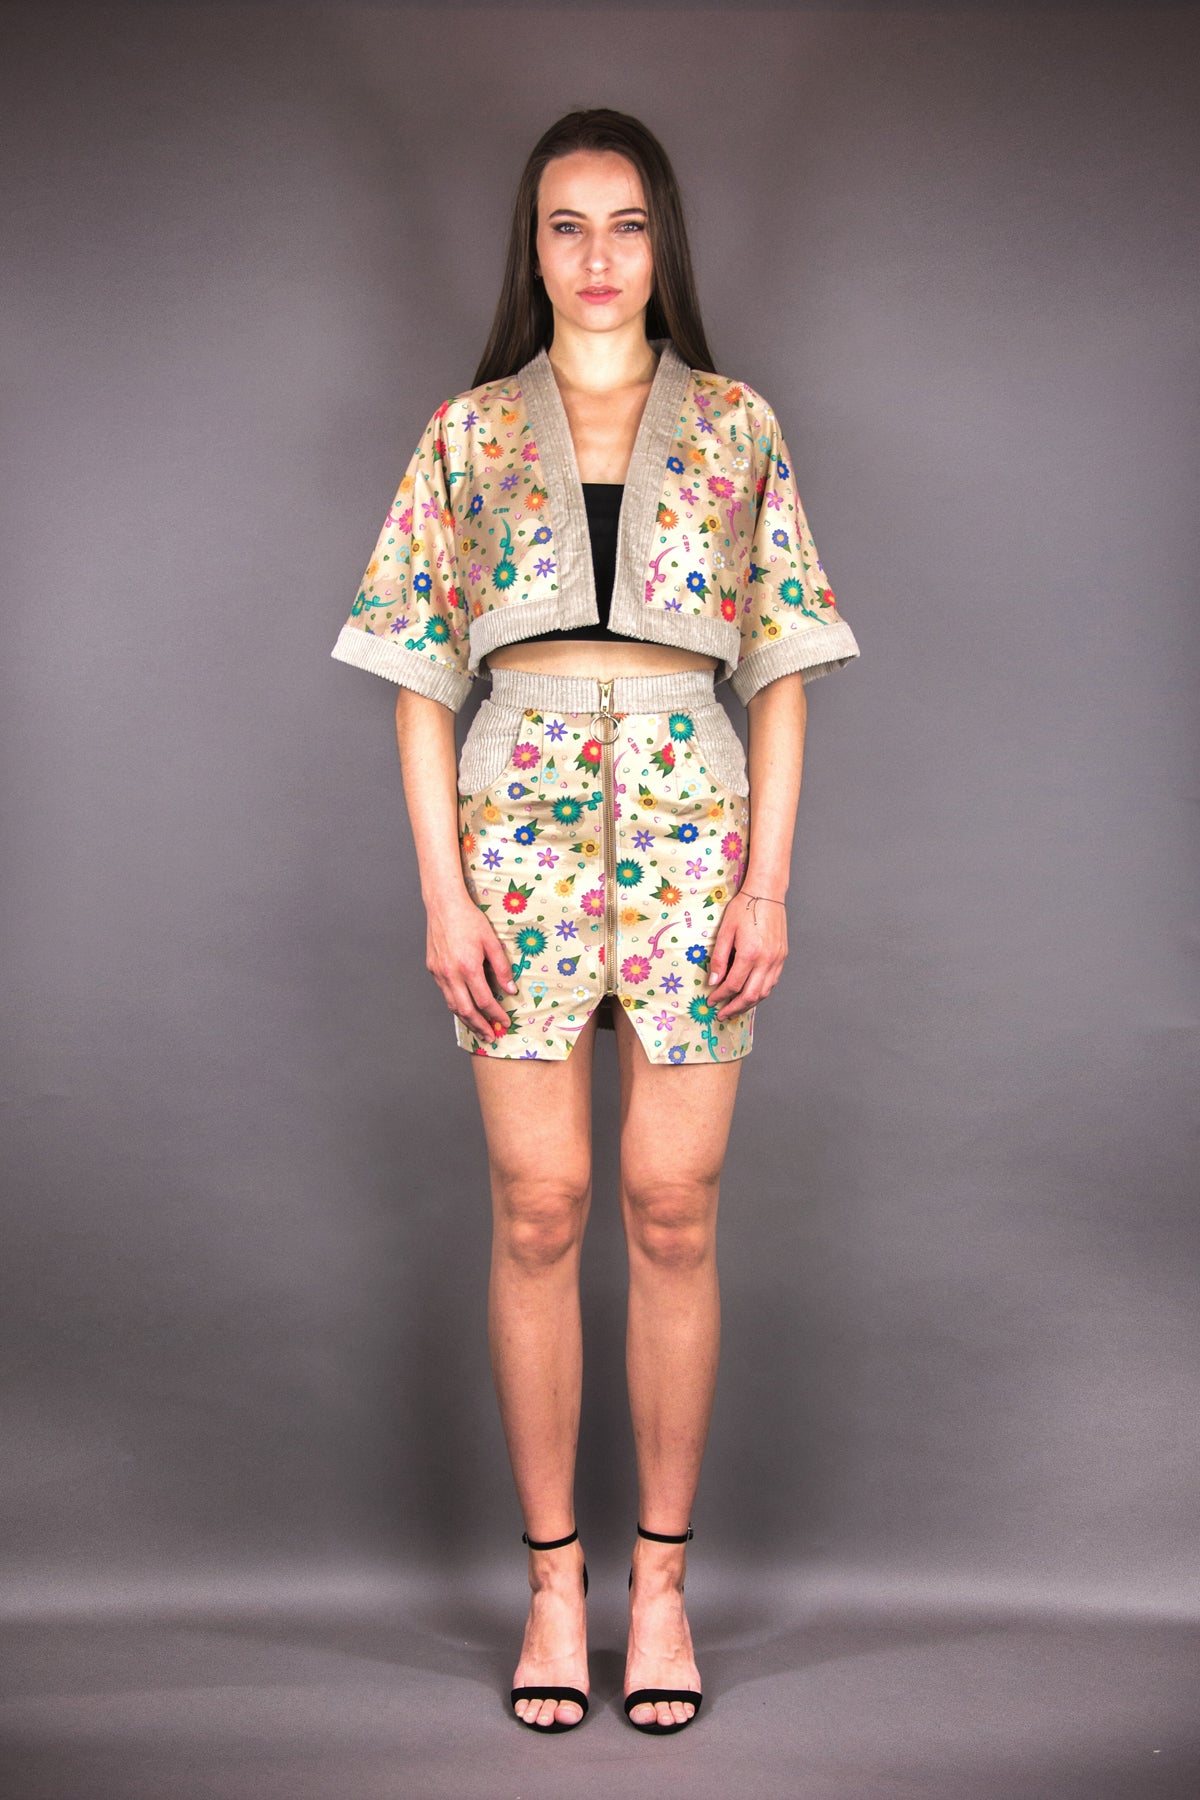 Bodycon Skirt "FLOWERS" - beige - Manuel Essl Design